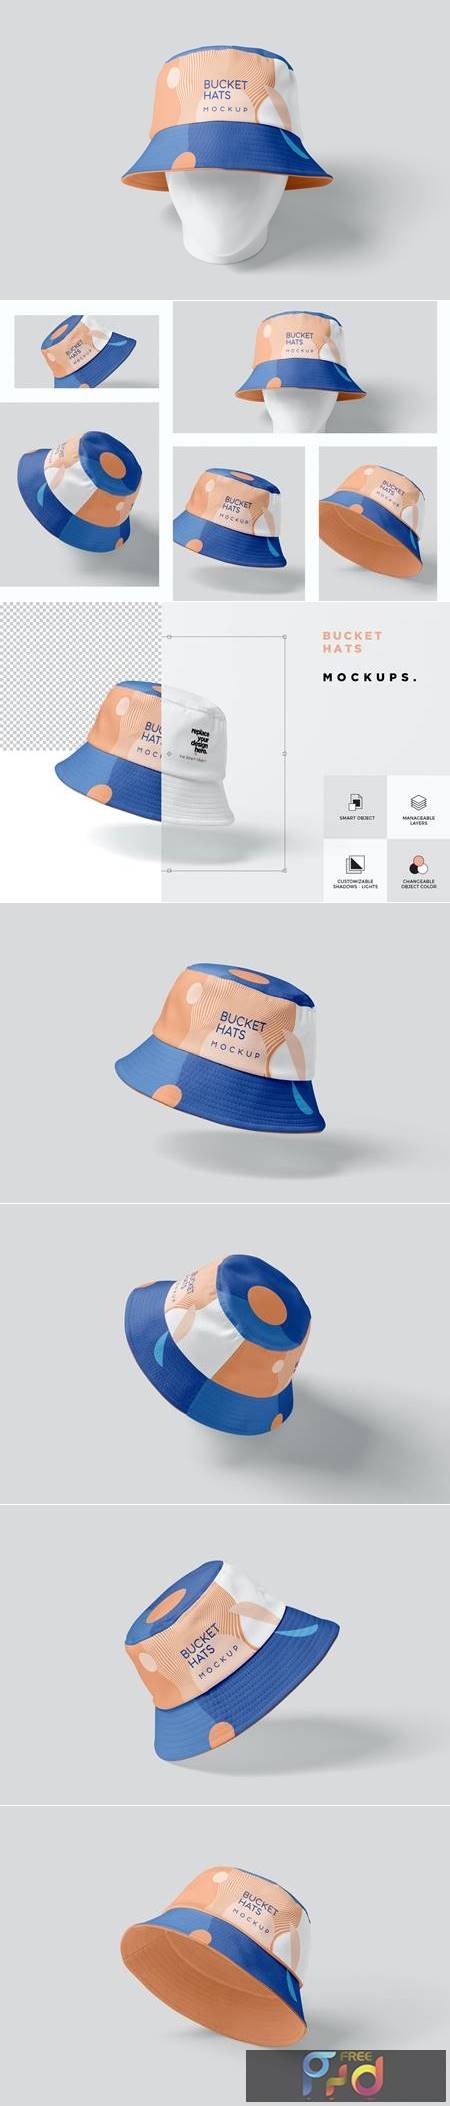 Bucket Hat Mockups